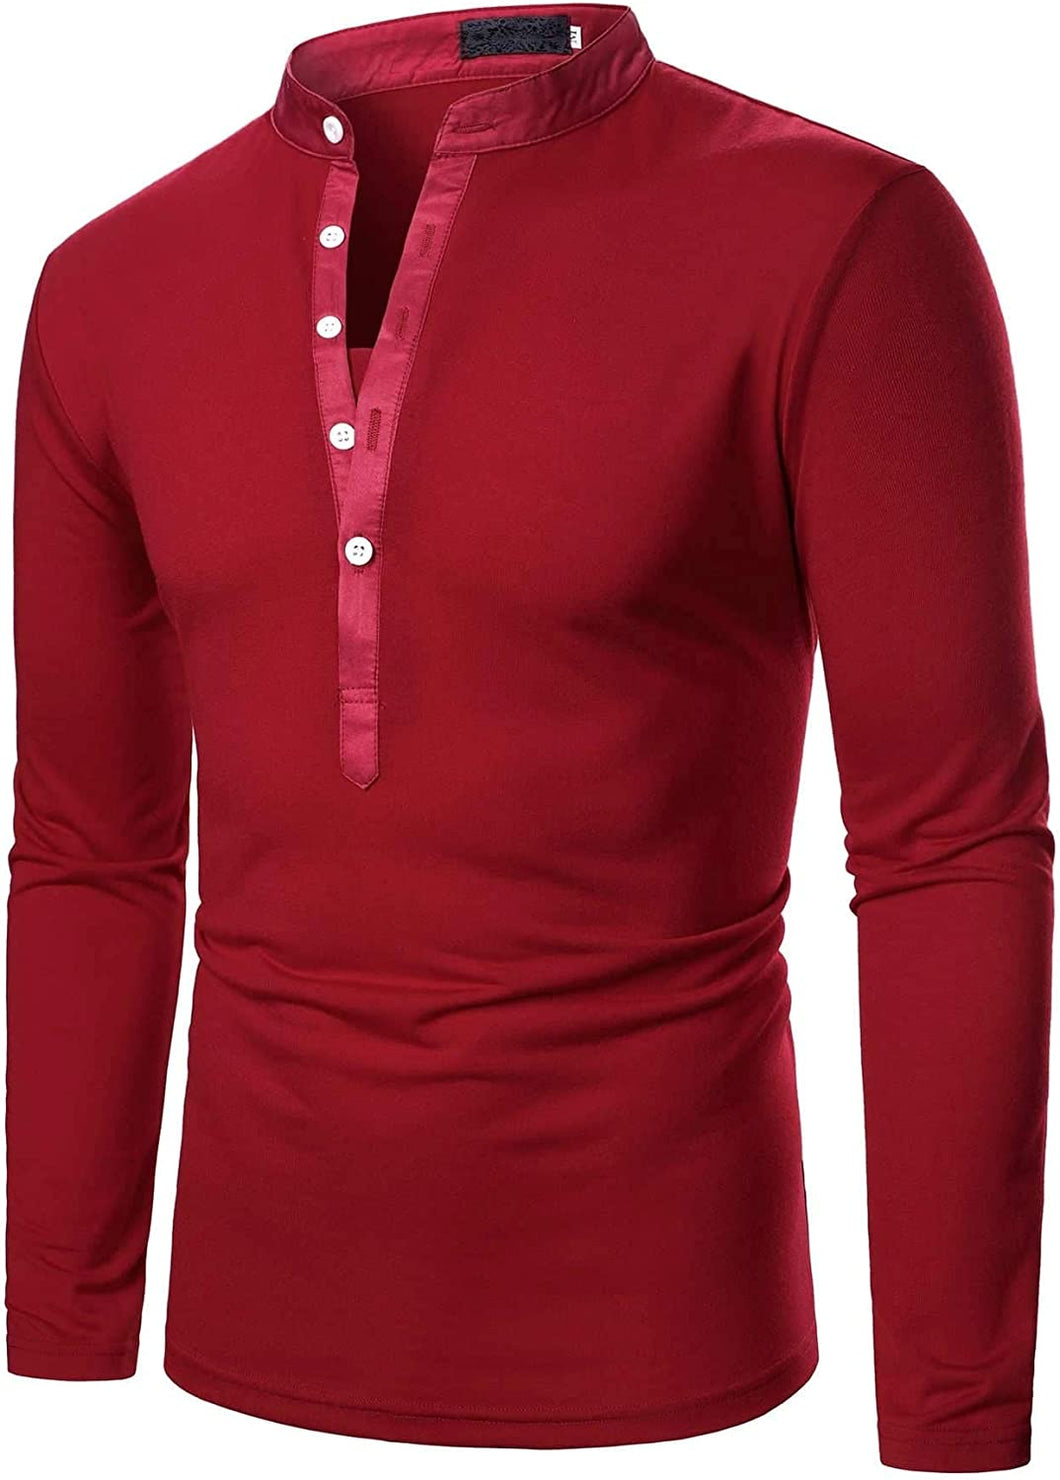 Men's Red Casual Long Sleeve Henley Shirt